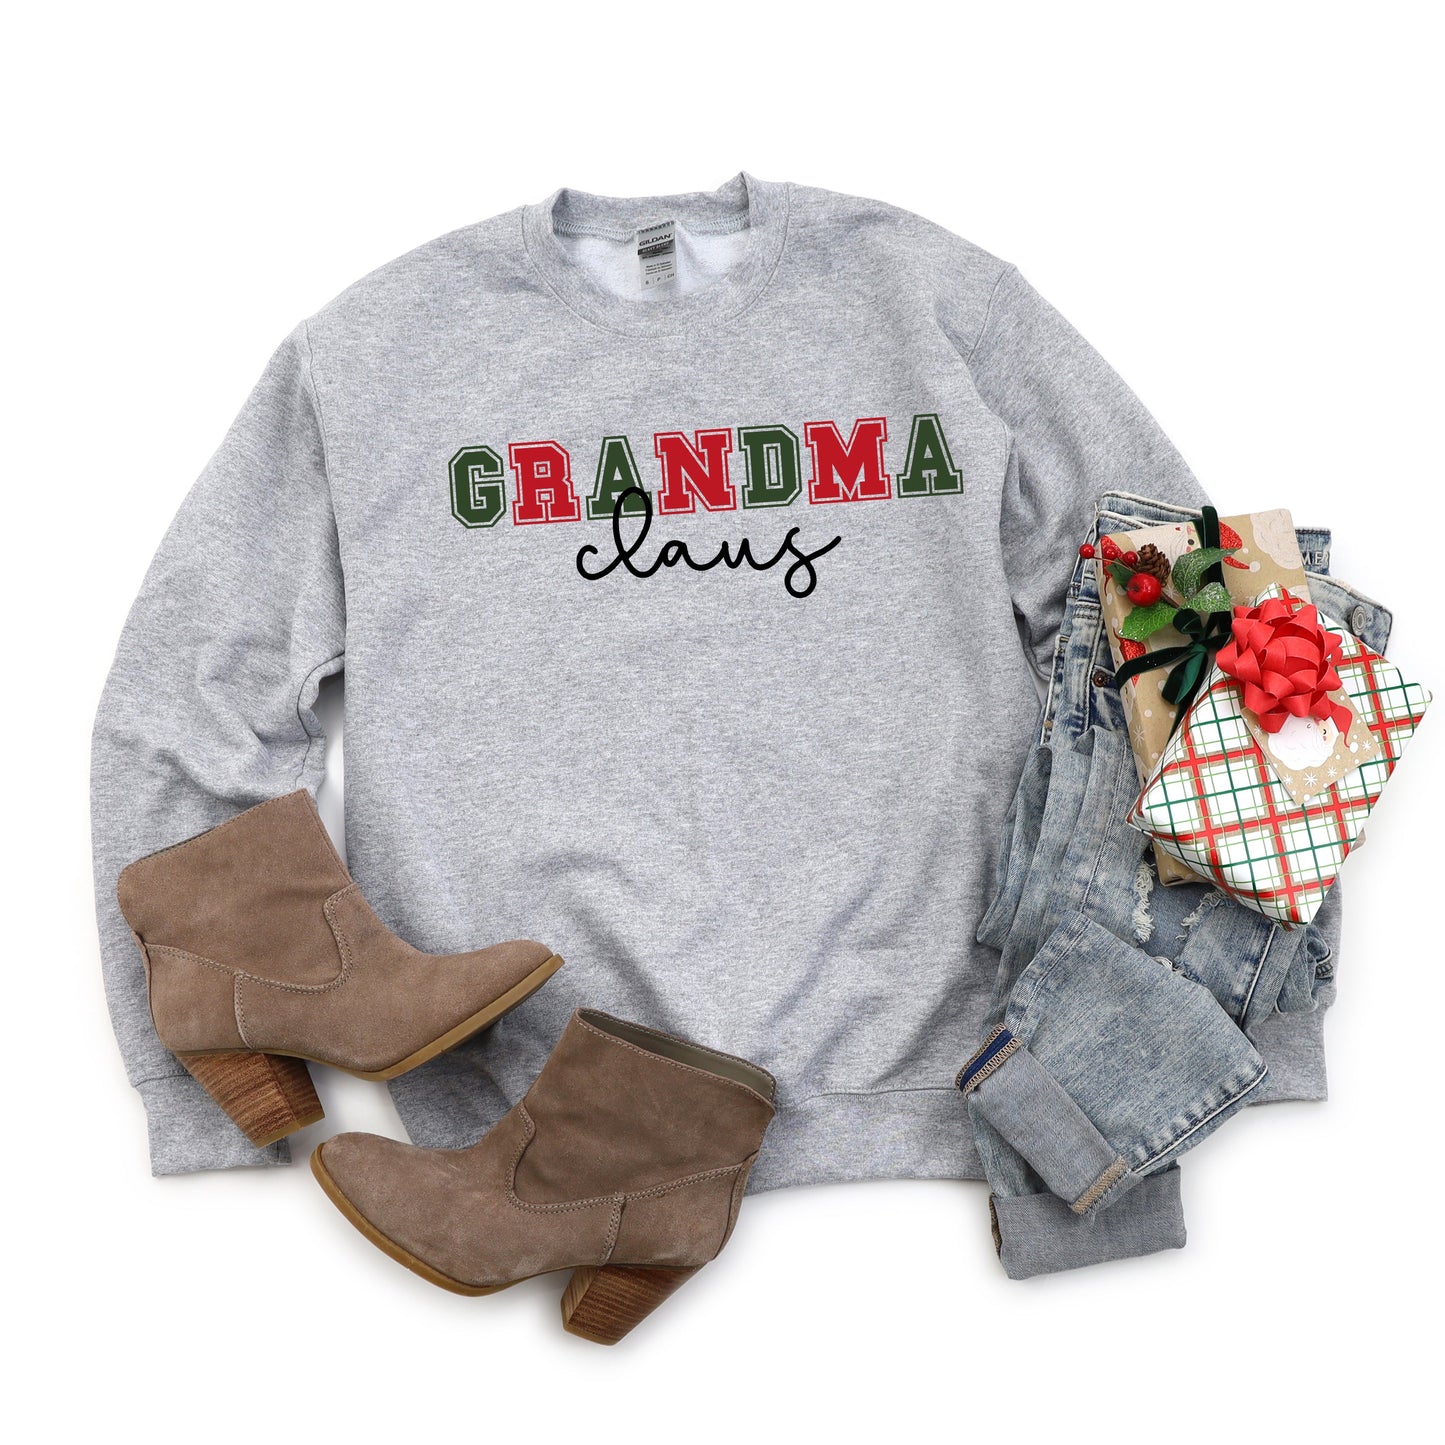 Grandma Claus |Sweatshirt